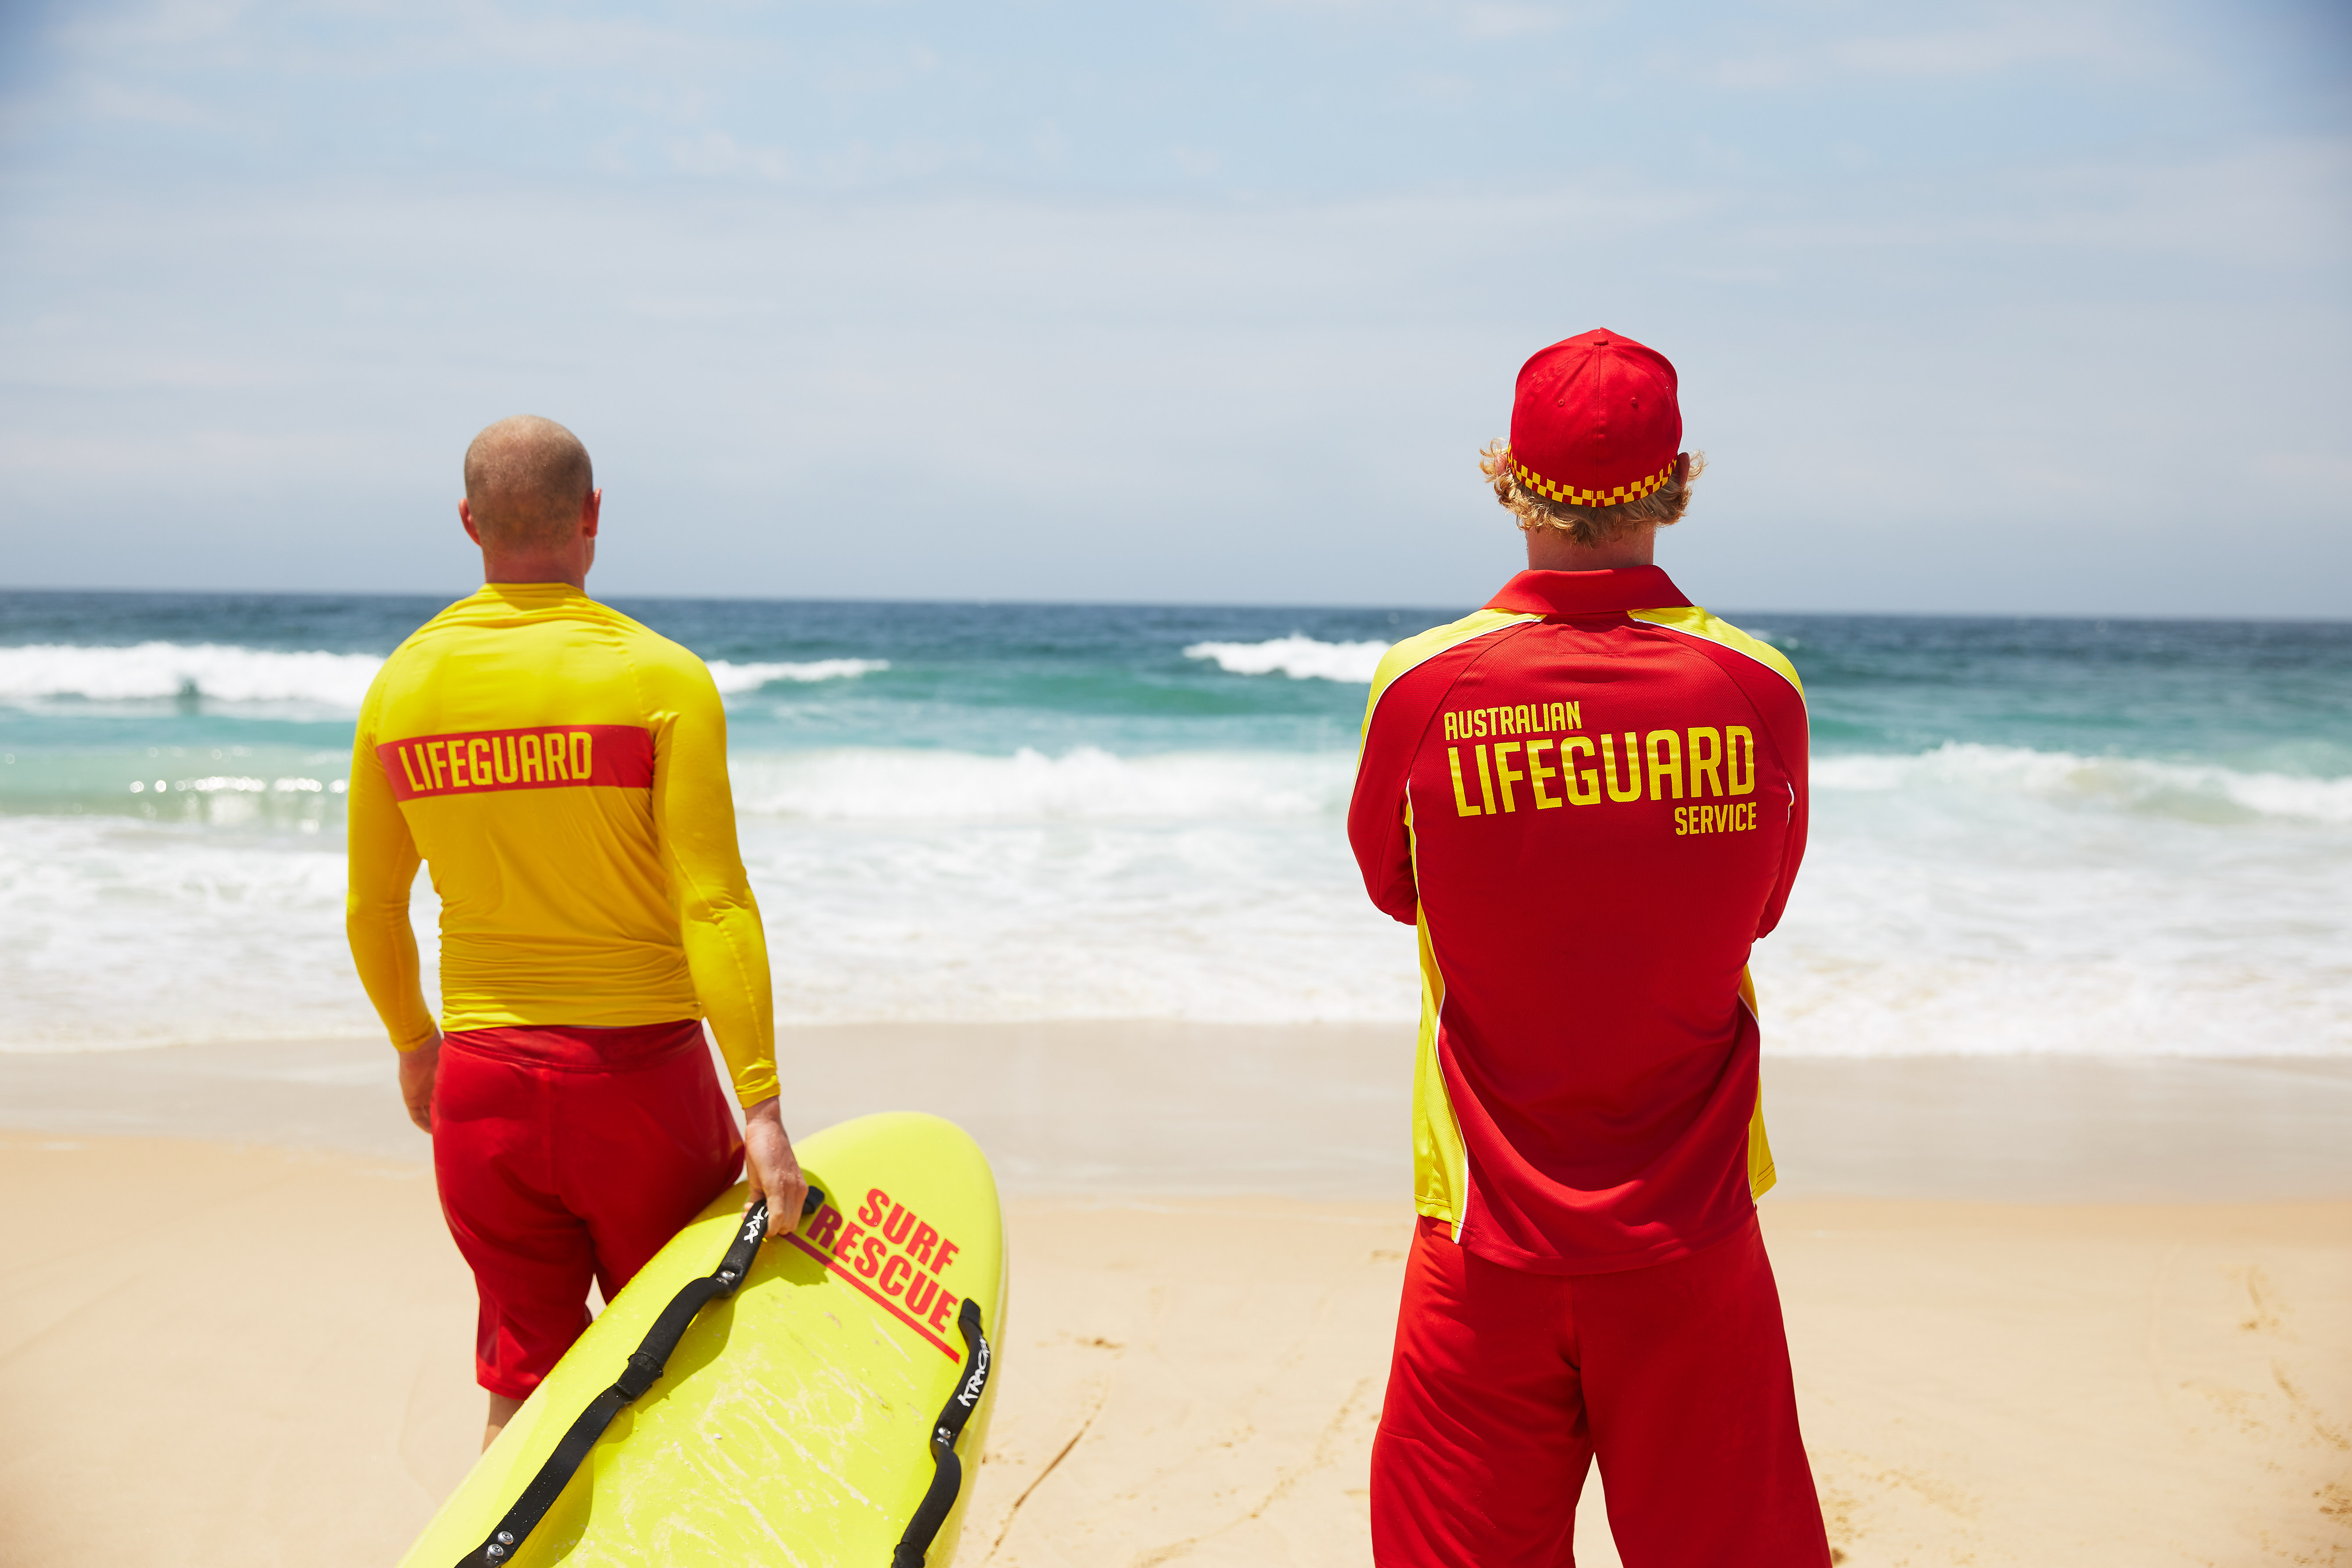 Lifeguards Honoured For Big Season - Australian Lifeguard Service ...